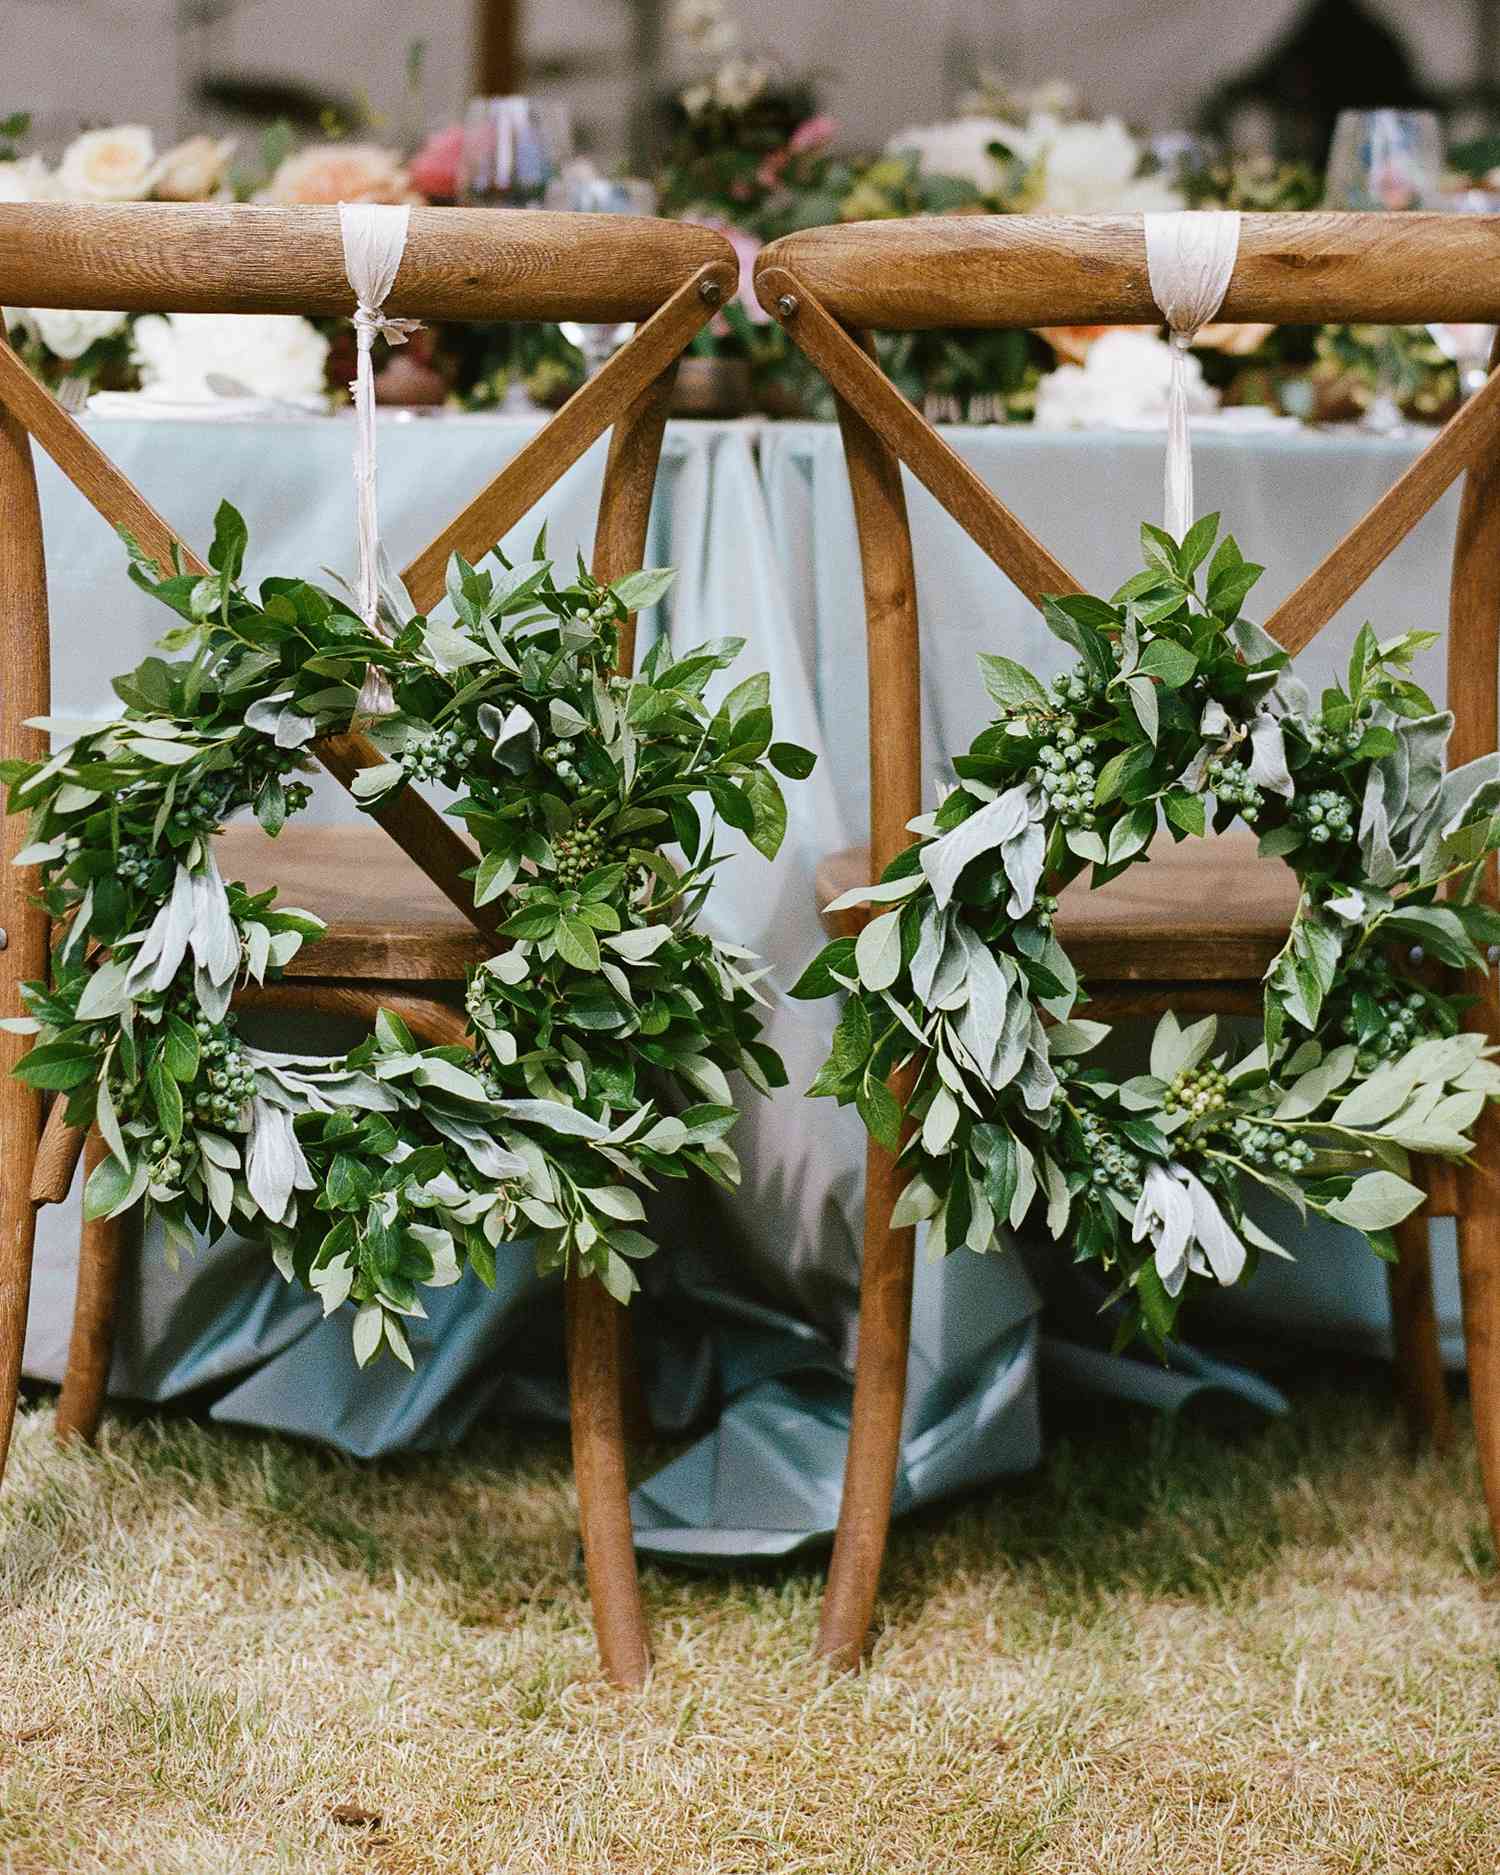 jamie-alex-wedding-wreaths-219-s111544-1014.jpg